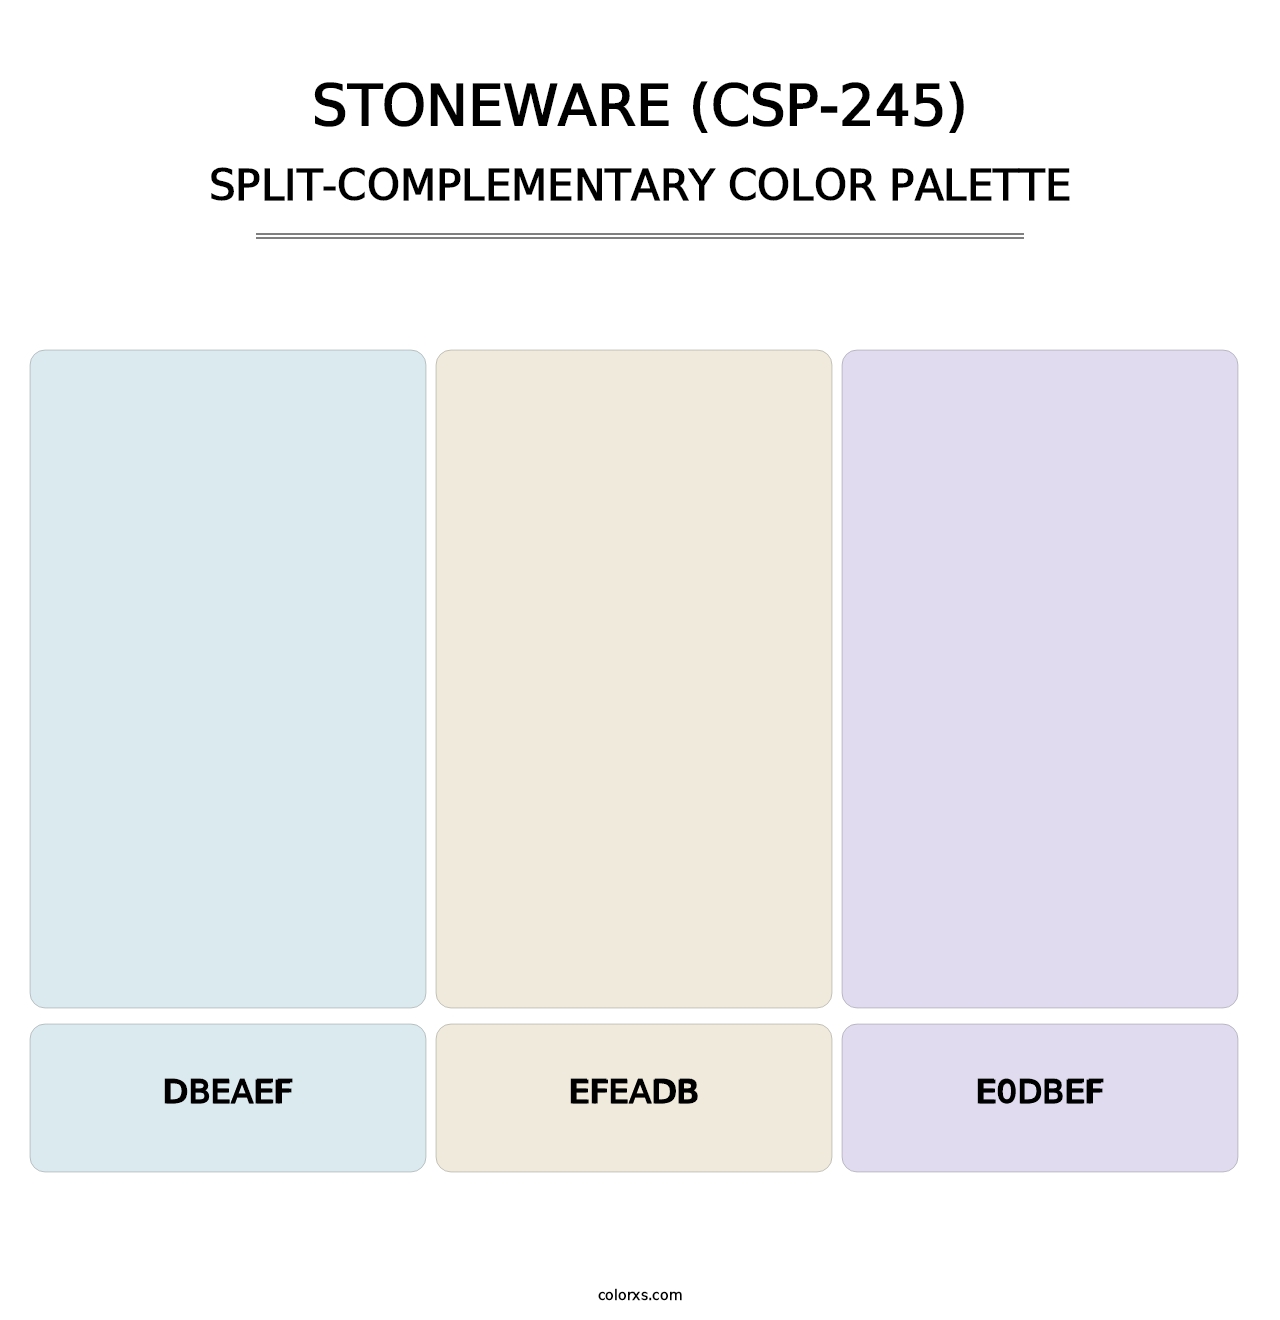 Stoneware (CSP-245) - Split-Complementary Color Palette